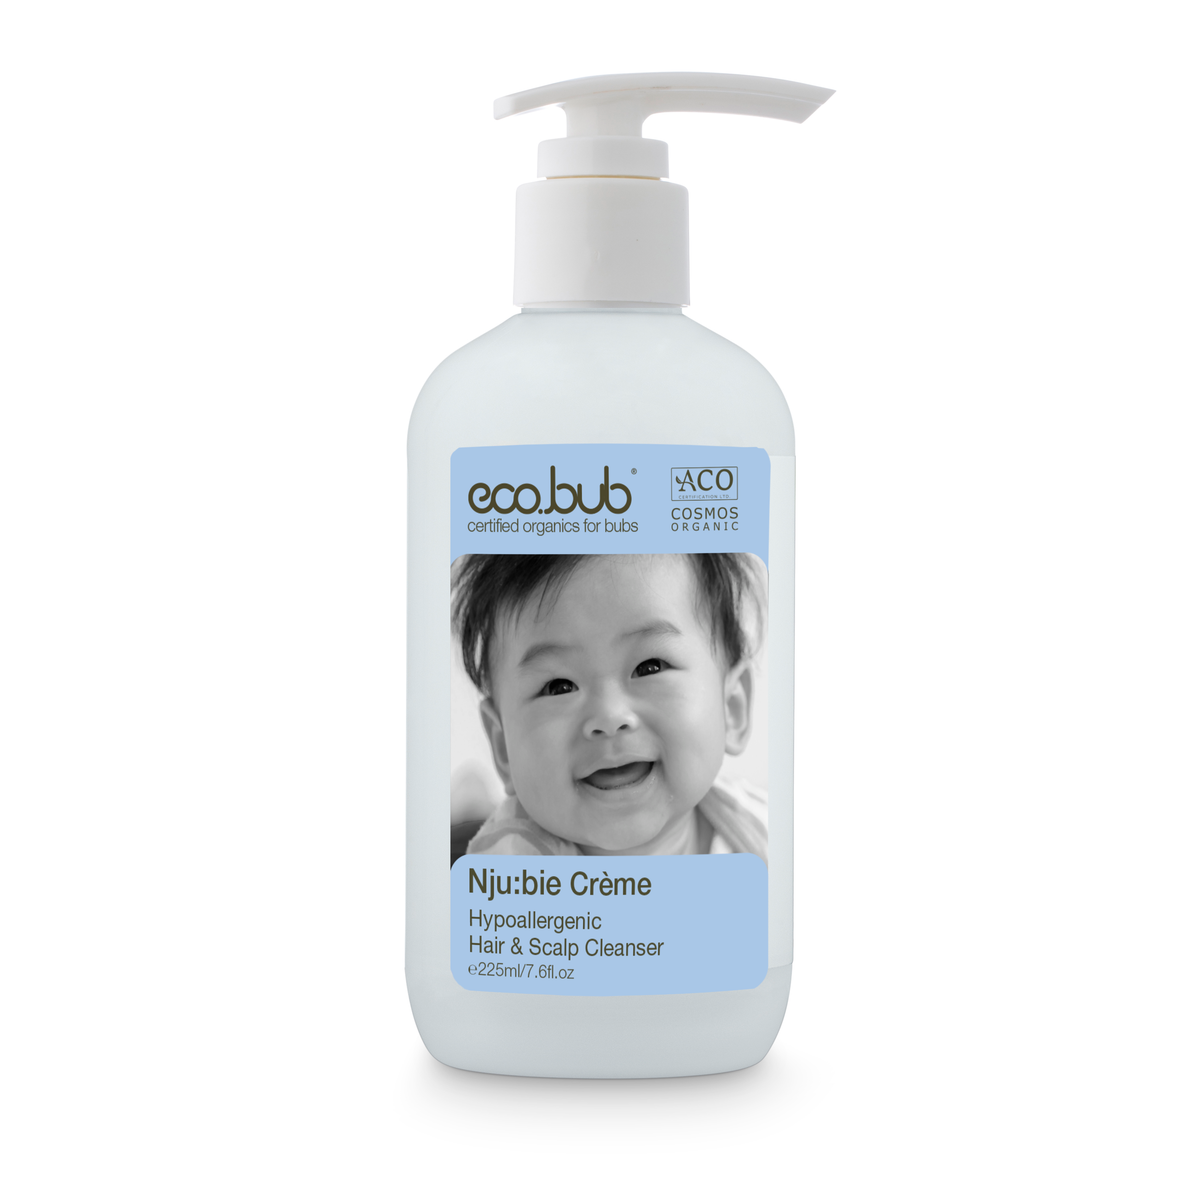 Eco.bub Nju:bie Crème Hair Cleanser